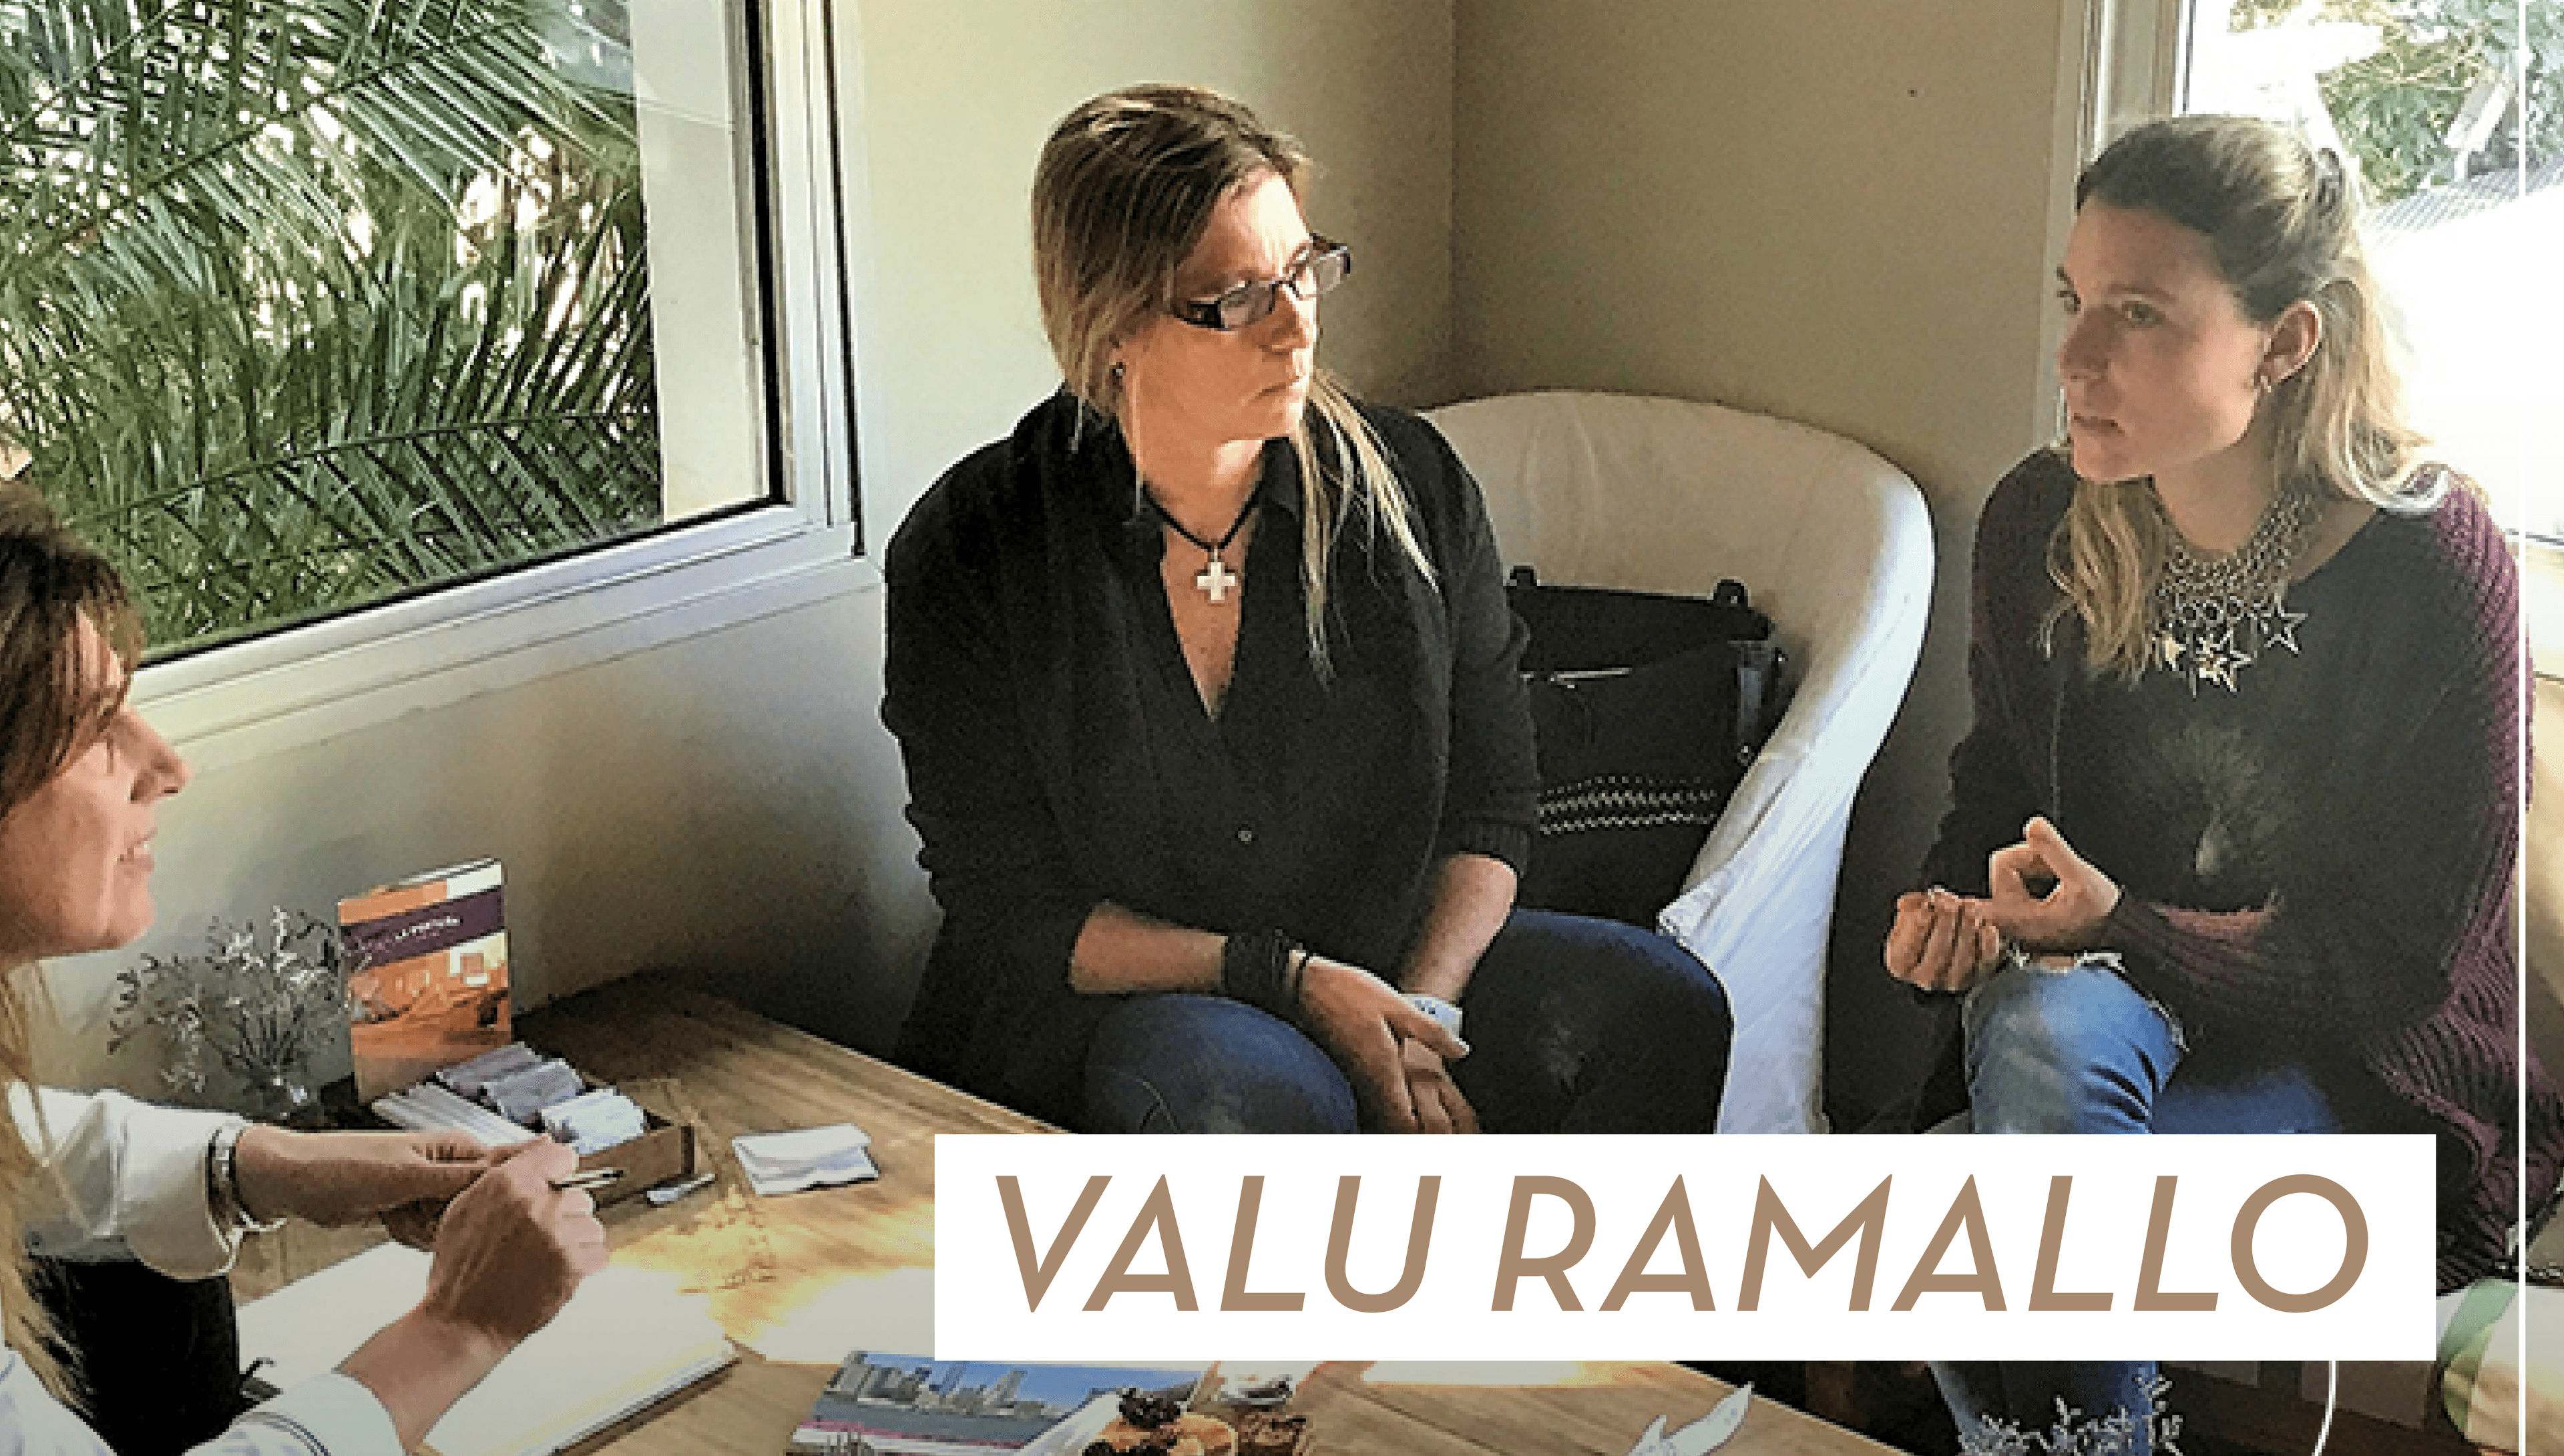 Valu Ramallo: Innovar y animarse a emprender.